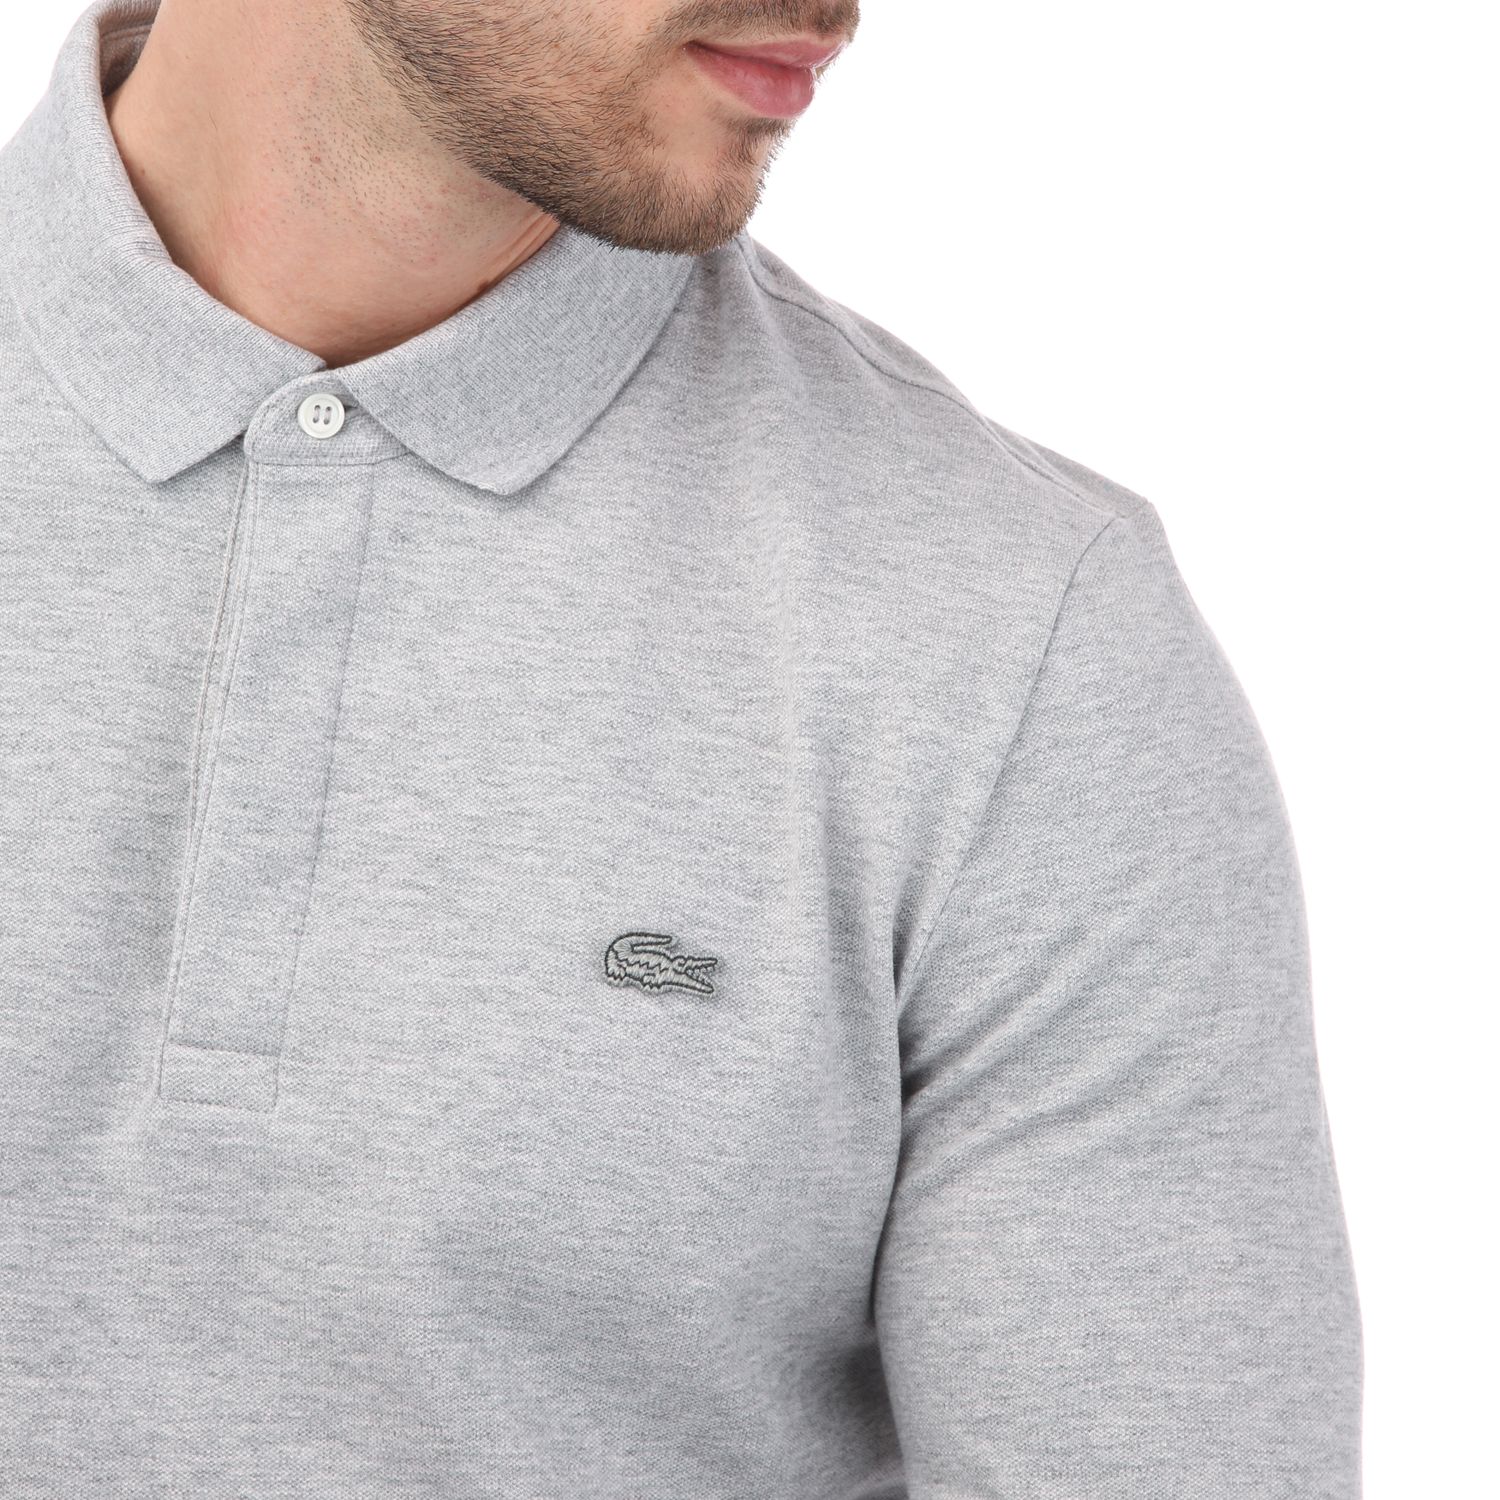 Lacoste Luxury Brand Grey Basic Polo Shirt - Tagotee